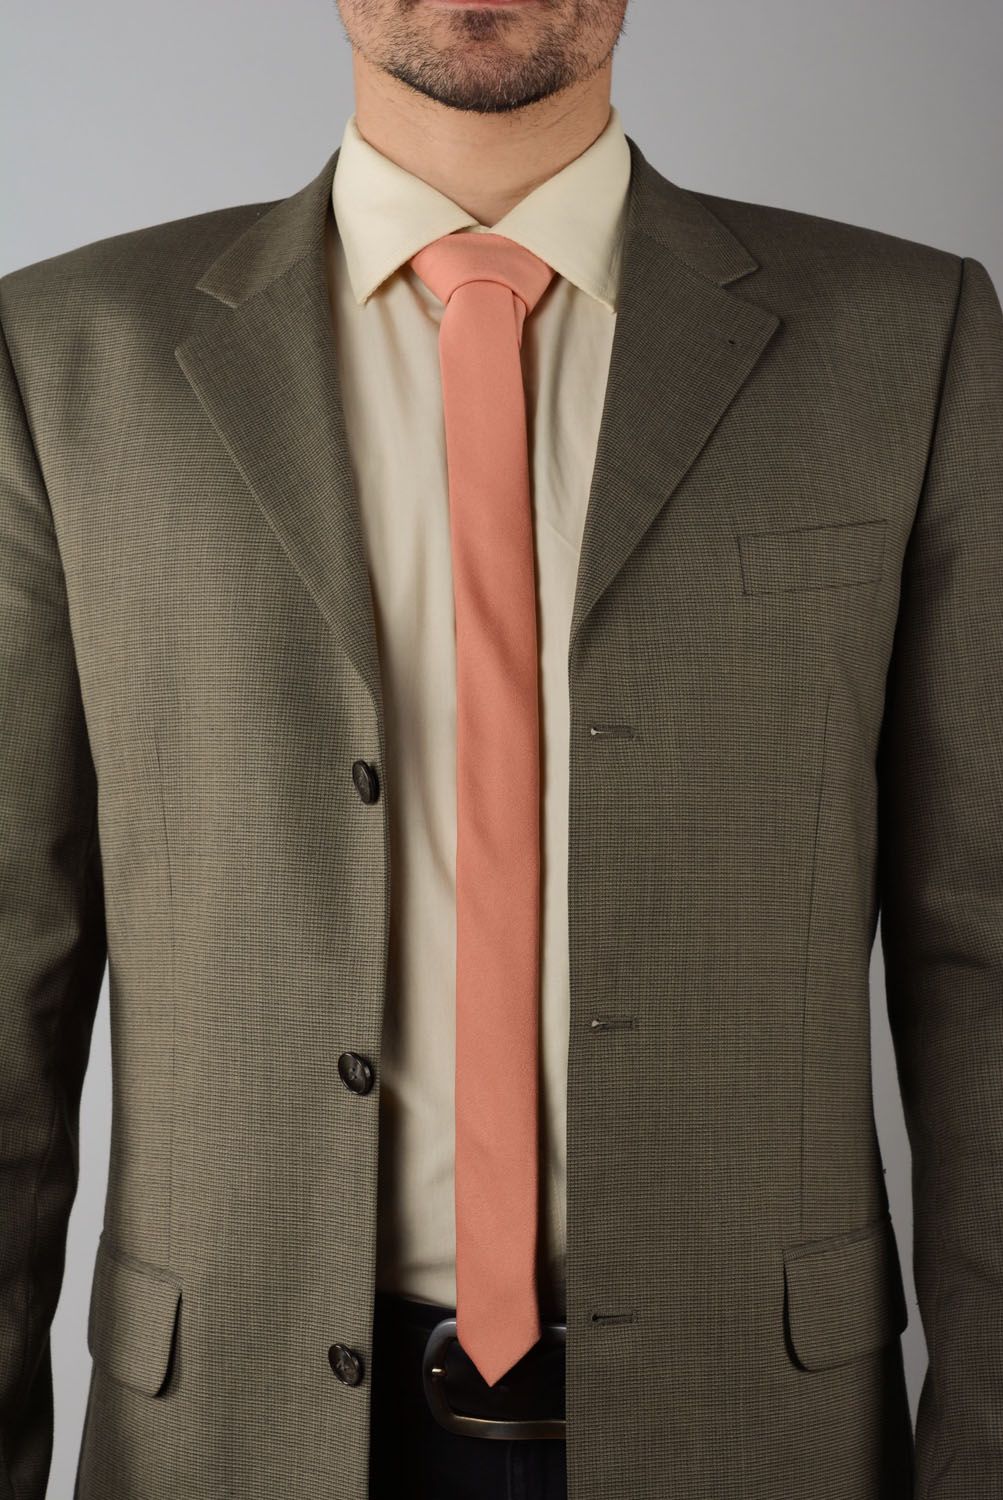 Cravate rose en gabardine faite main photo 1